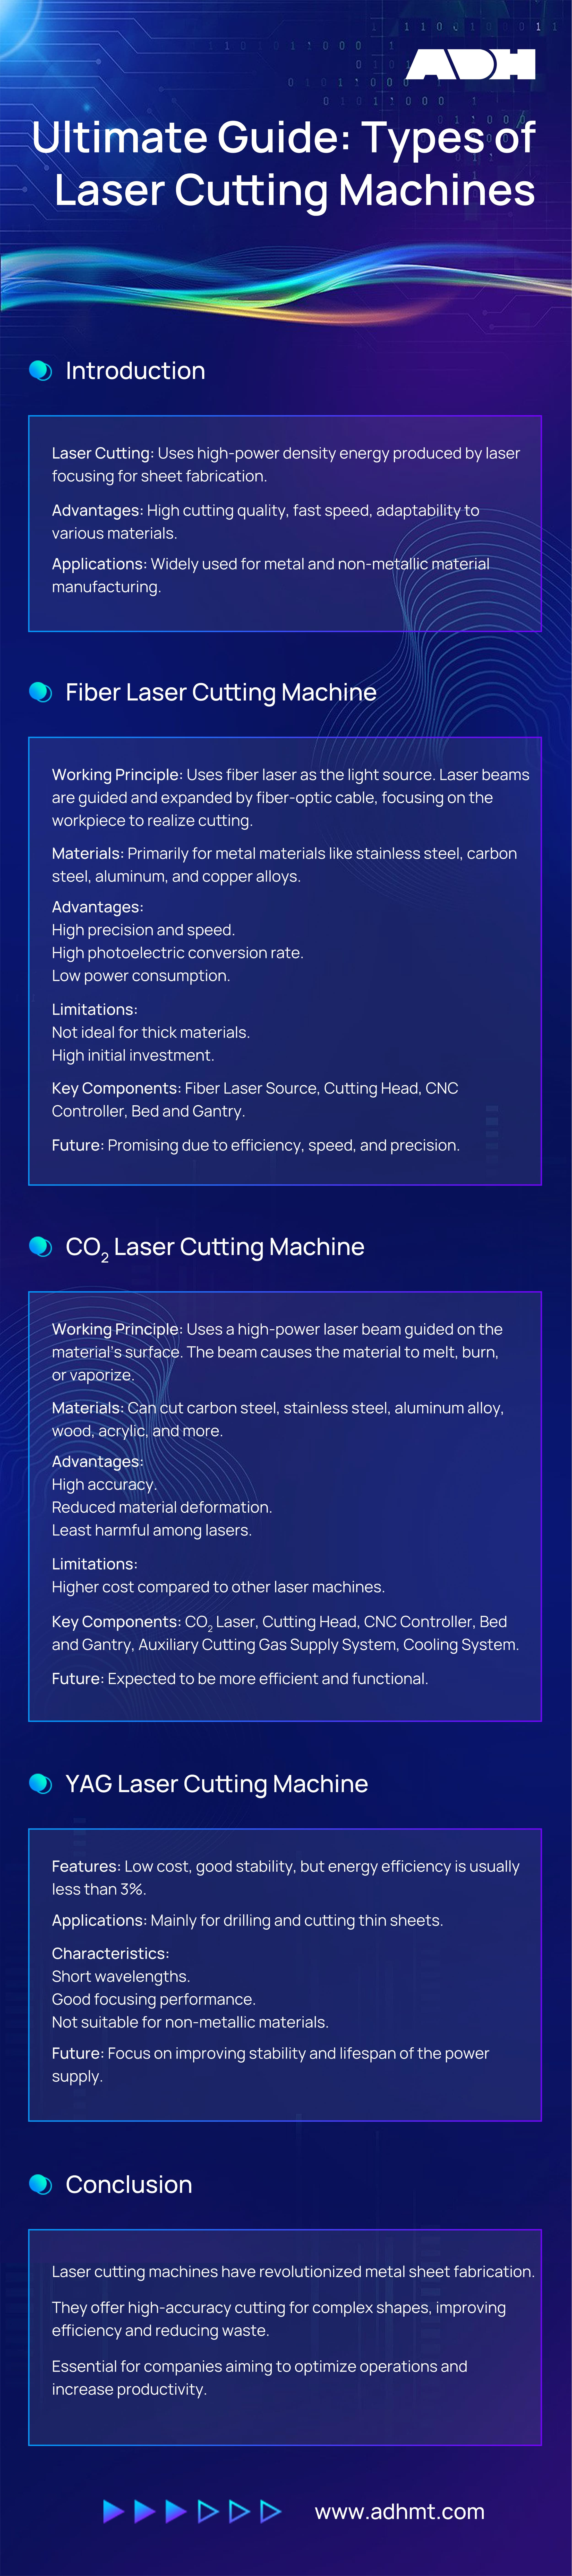 tipos de máquinas de corte por láser infografía